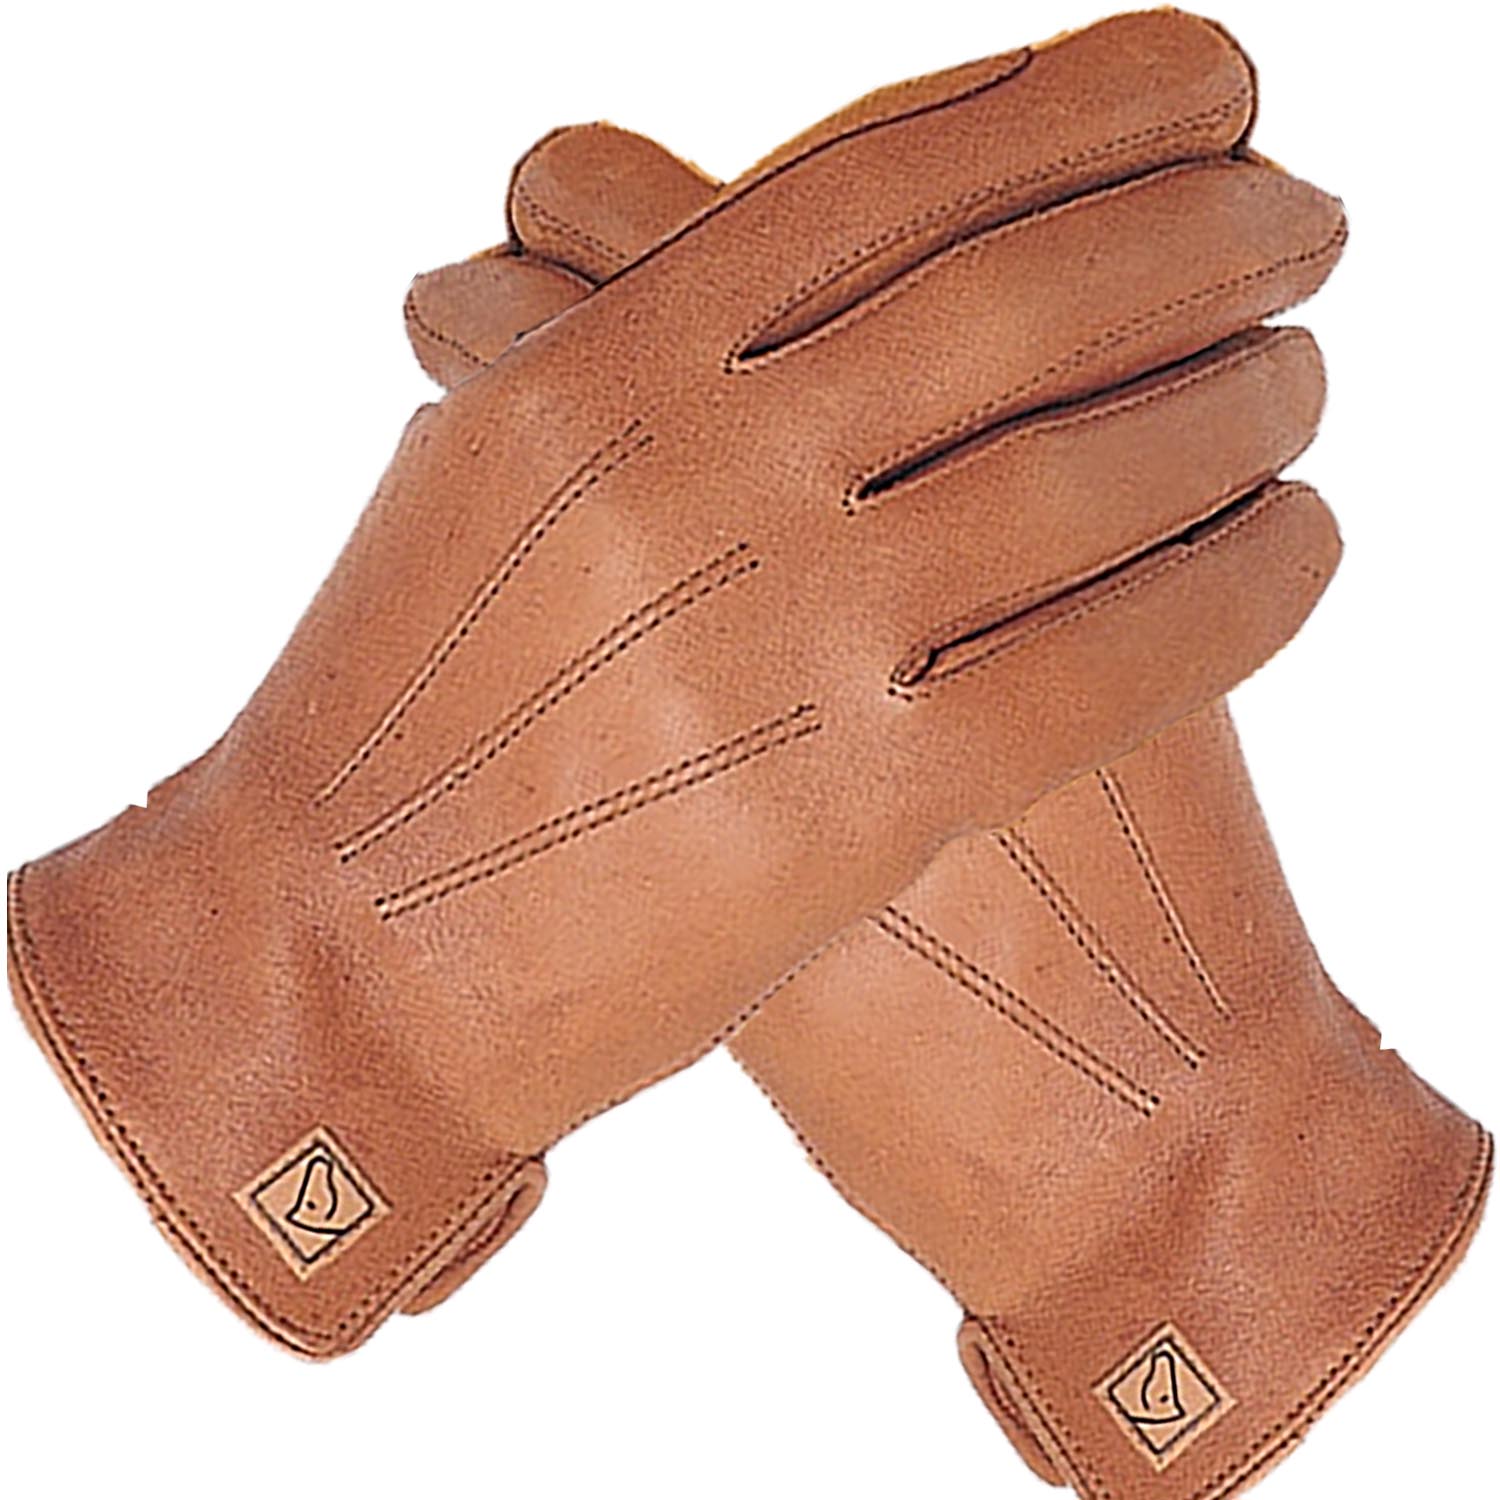 SSG 1850 Deerskin Lined Trail/Roper Gloves